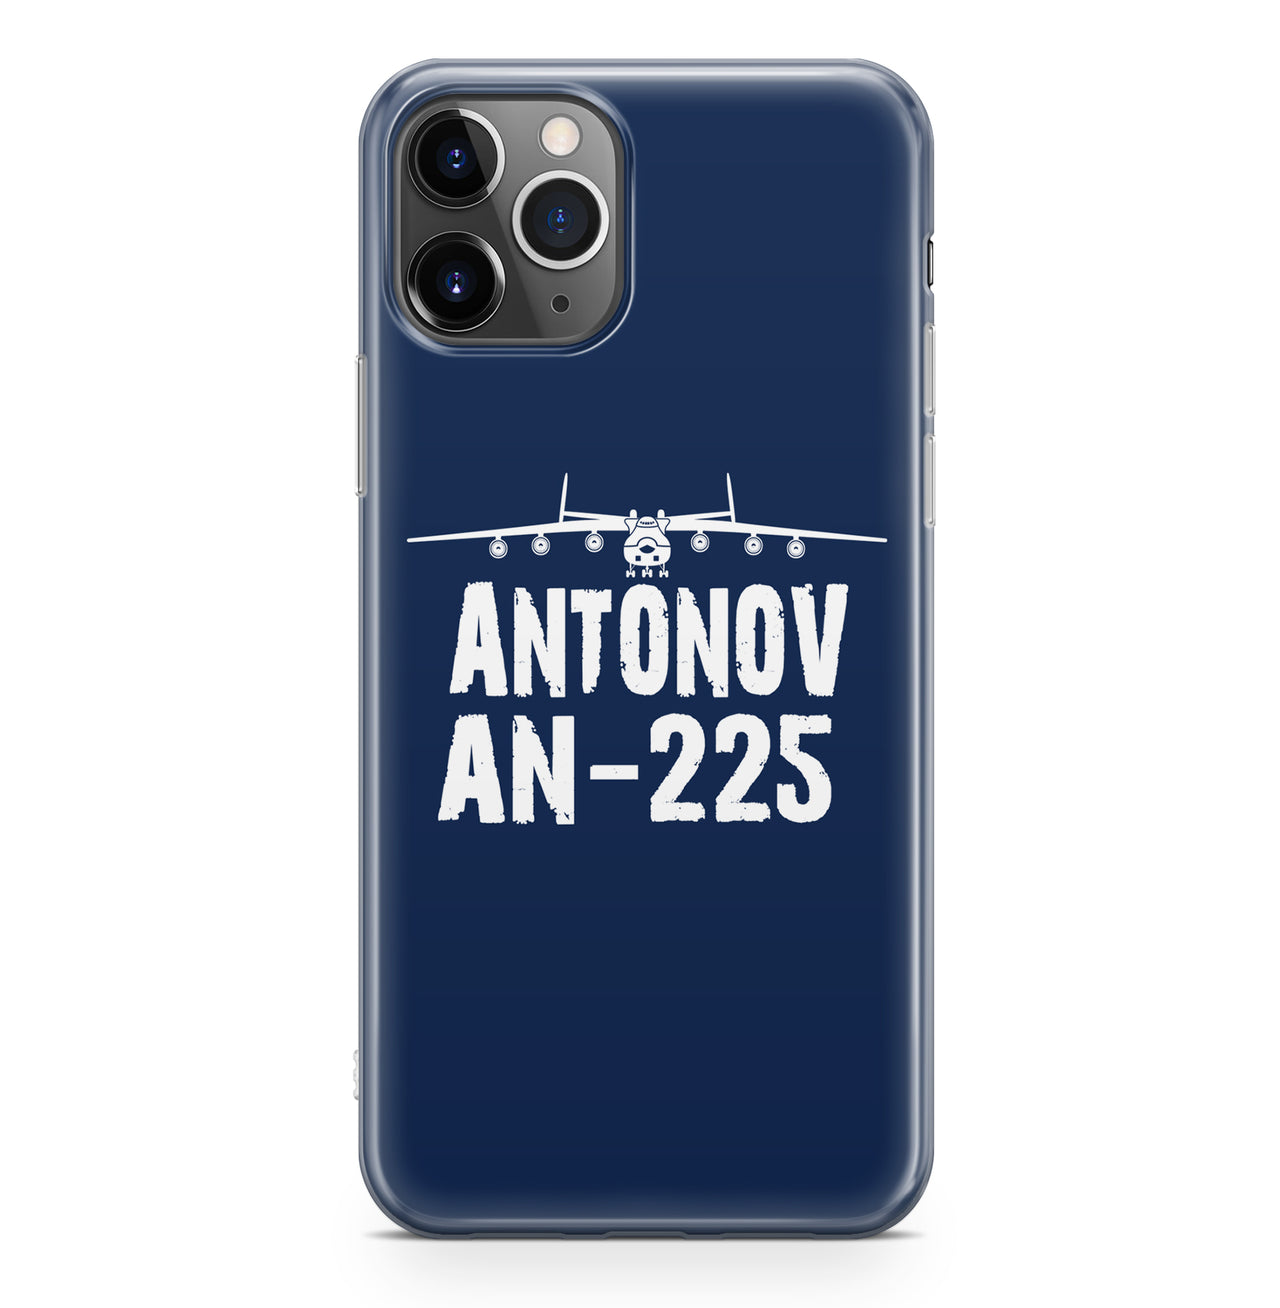 Antonov AN-225 & Plane Designed iPhone Cases